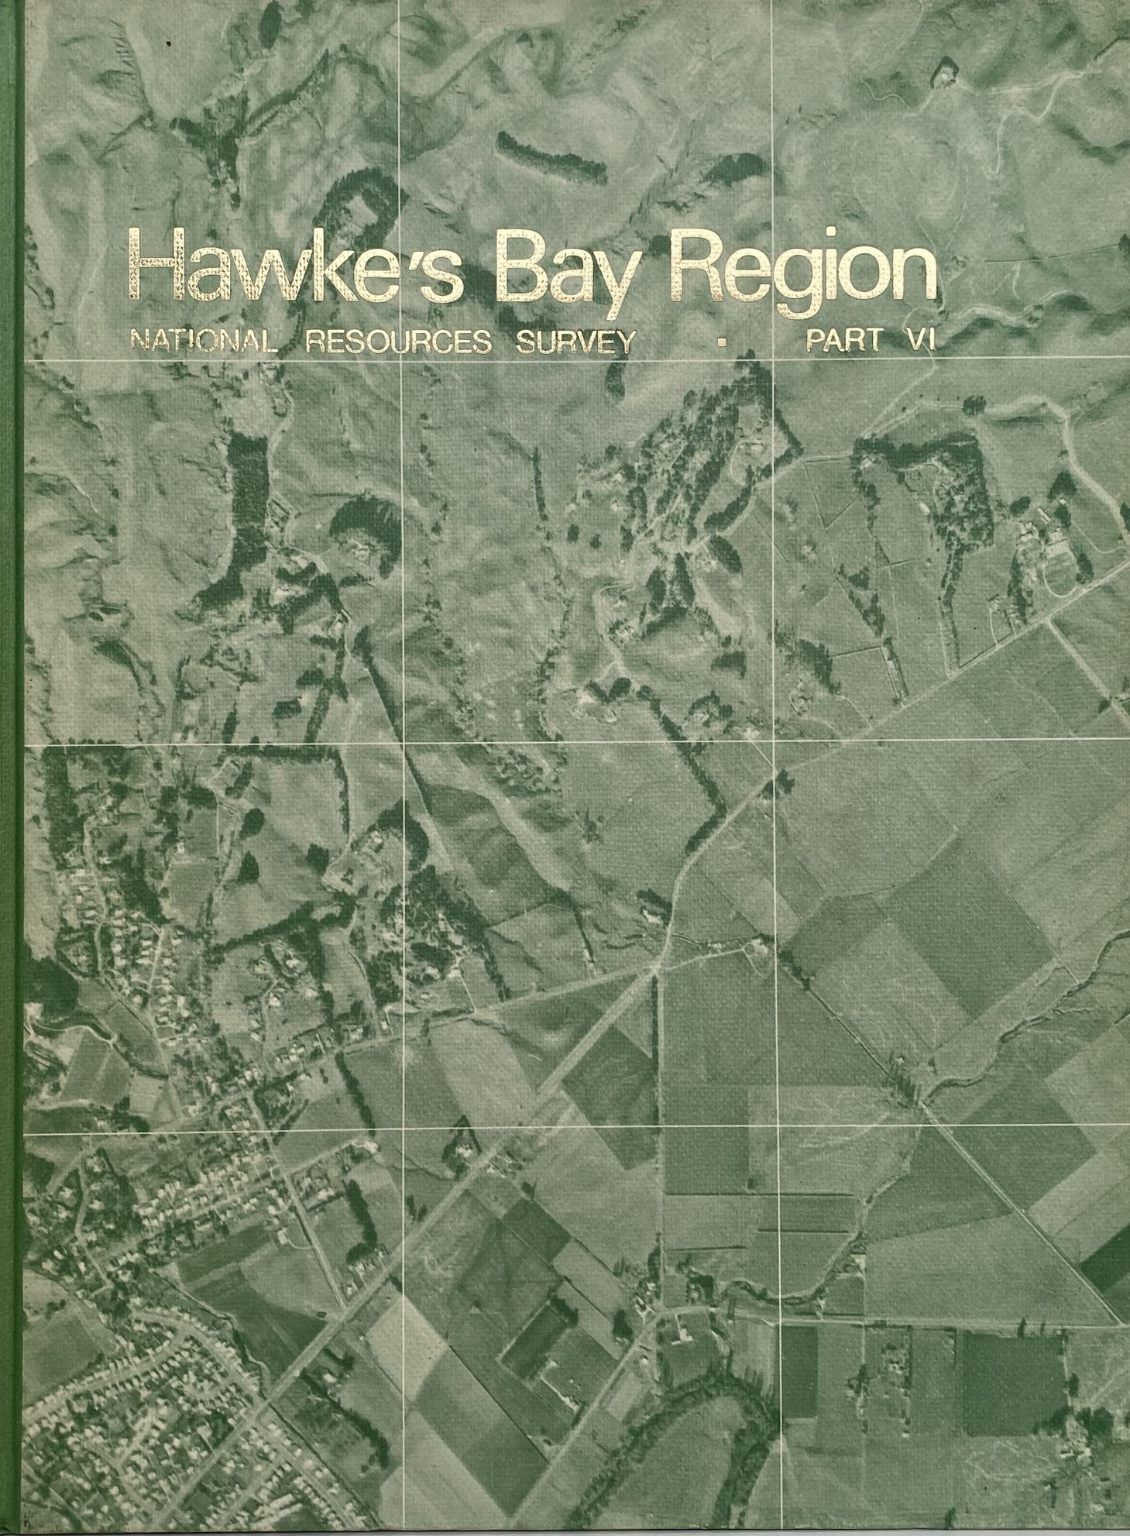 NATIONAL RESOURCES SURVEY; Part VI - Hawke's Bay Region